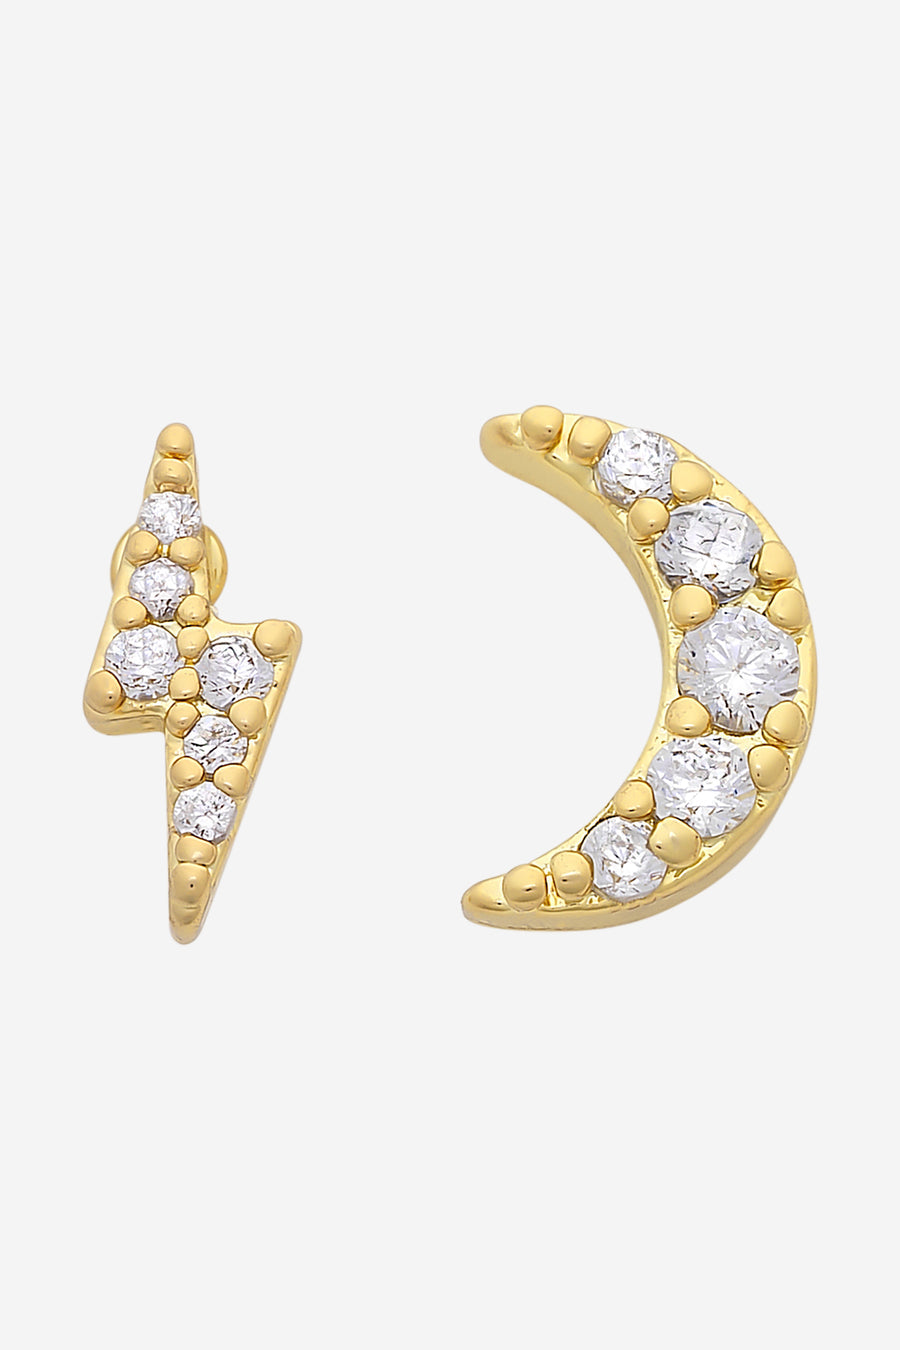 Petite Dream Gold Earrings